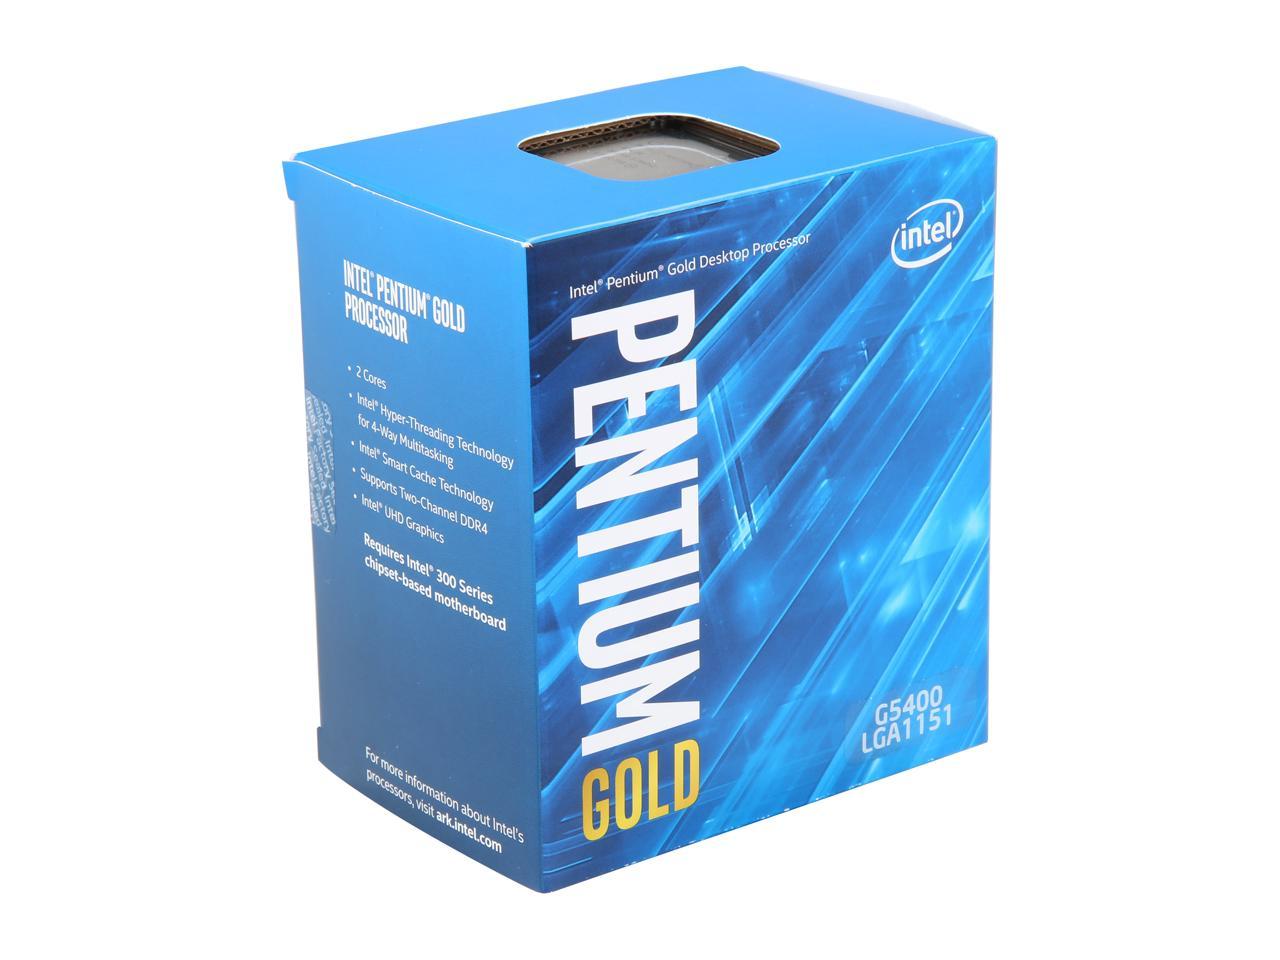 Intel Pentium Gold G5400 Coffee Lake Dual-Core 3.7 GHz LGA 1151 (300 Series) 58W BX80684G5400 Desktop Processor Intel UHD Graphics 610